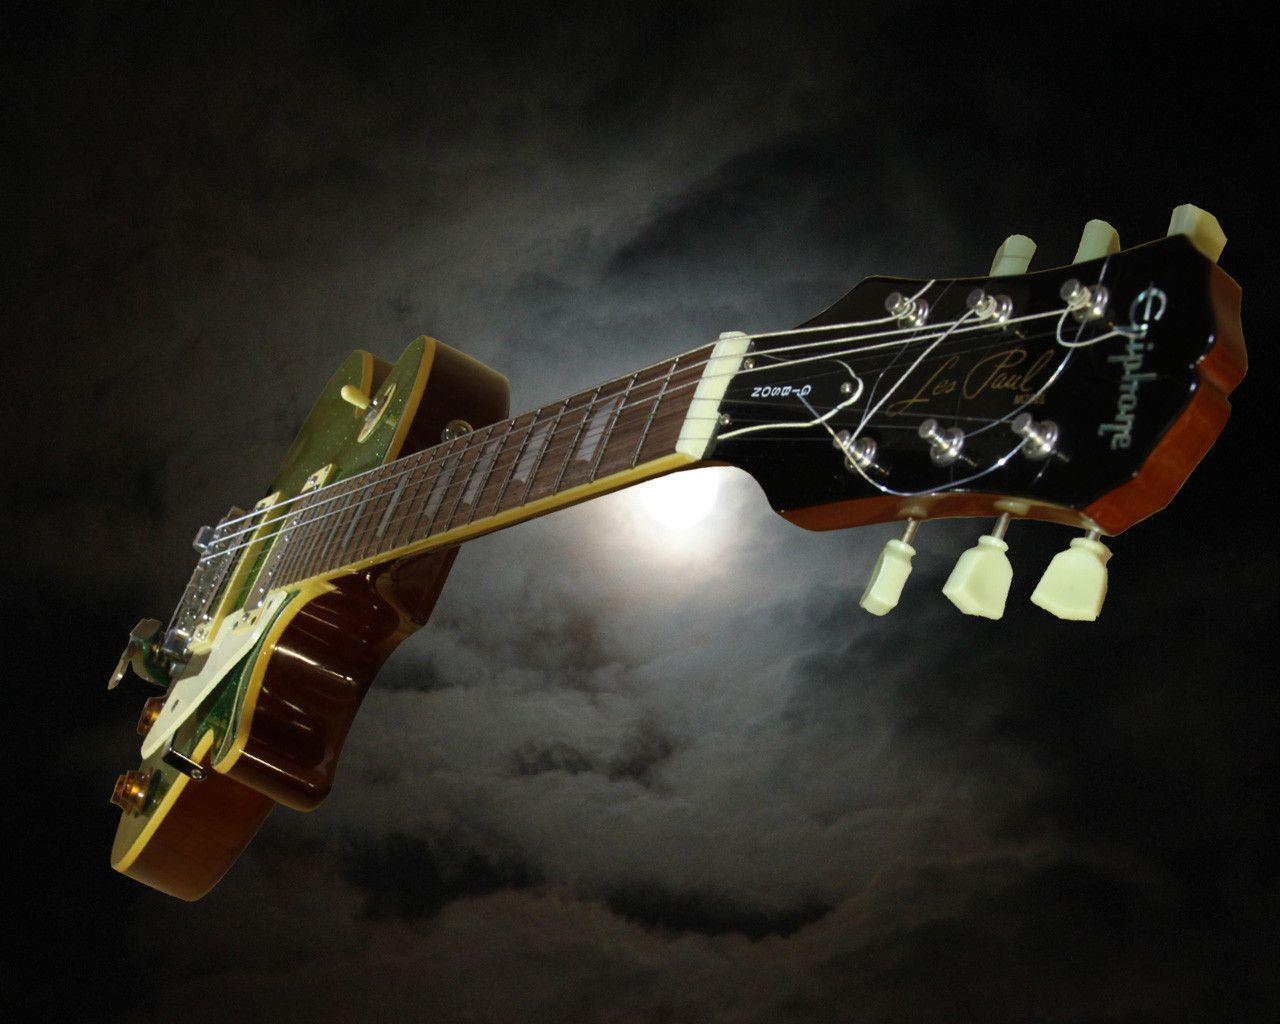 Gibson Les Paul Wallpaper HD